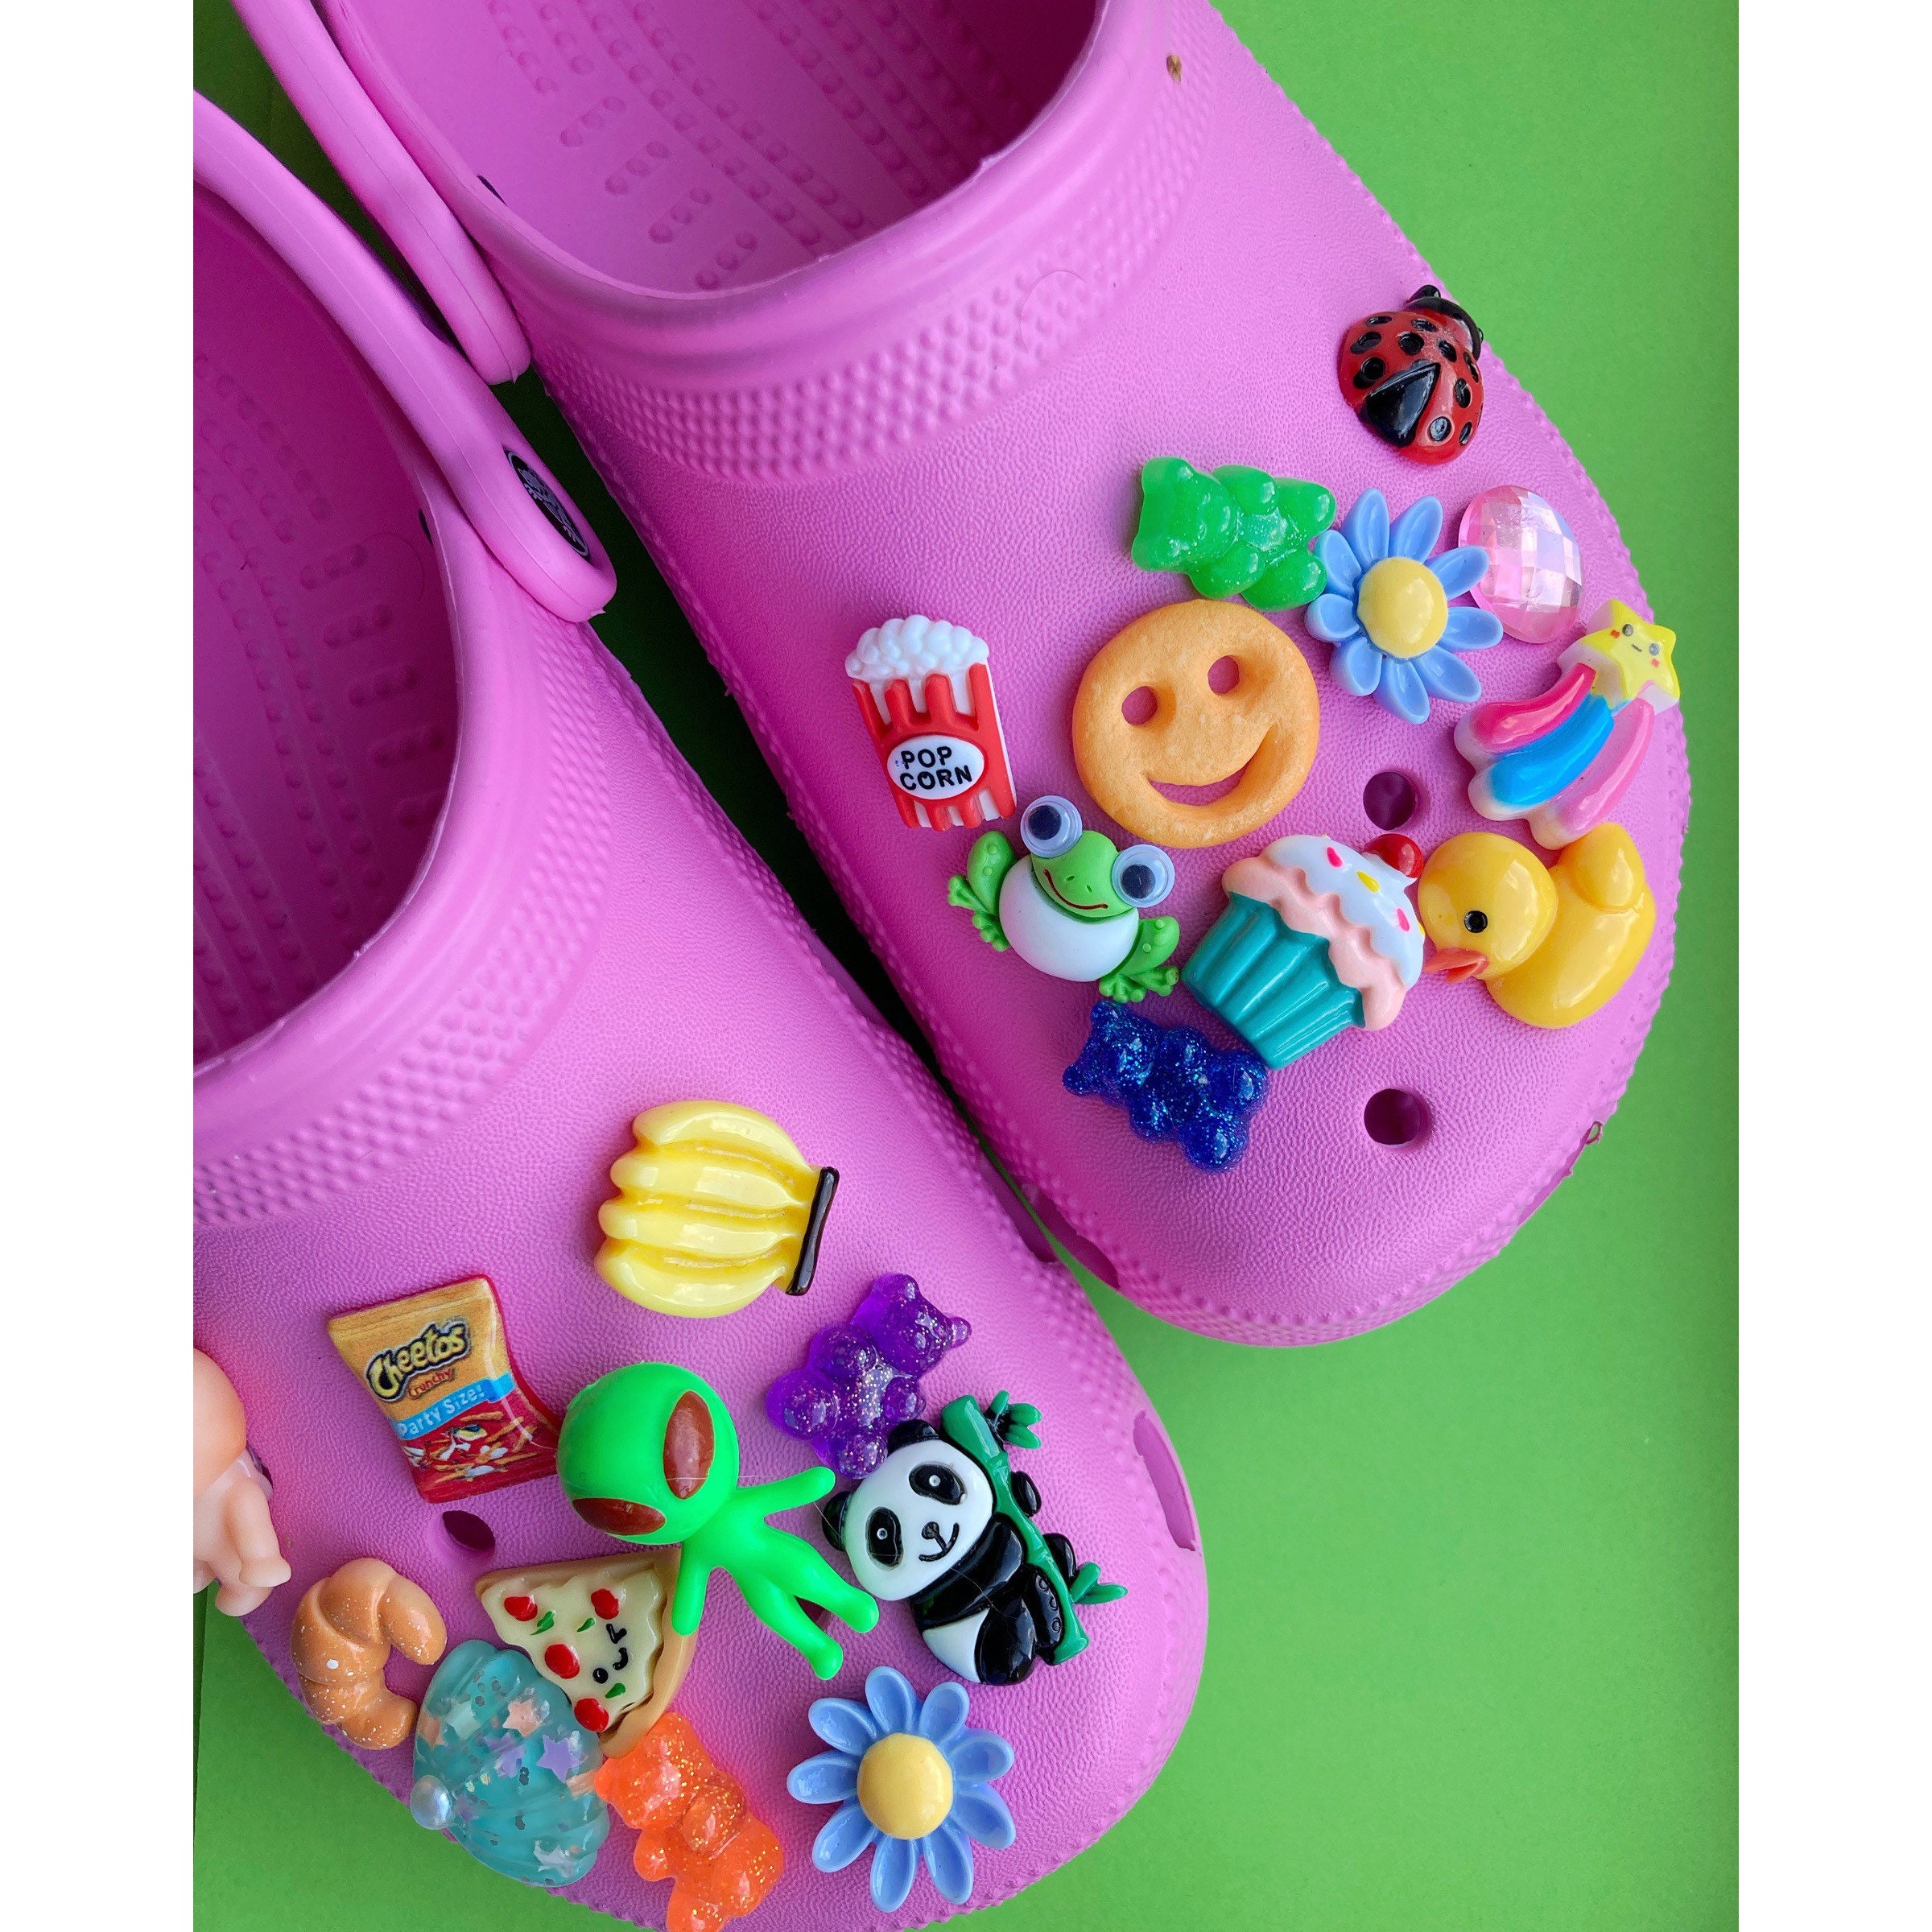 Crocs Bumble Bee Shoe Decoration Charms - Multicolour One Size 